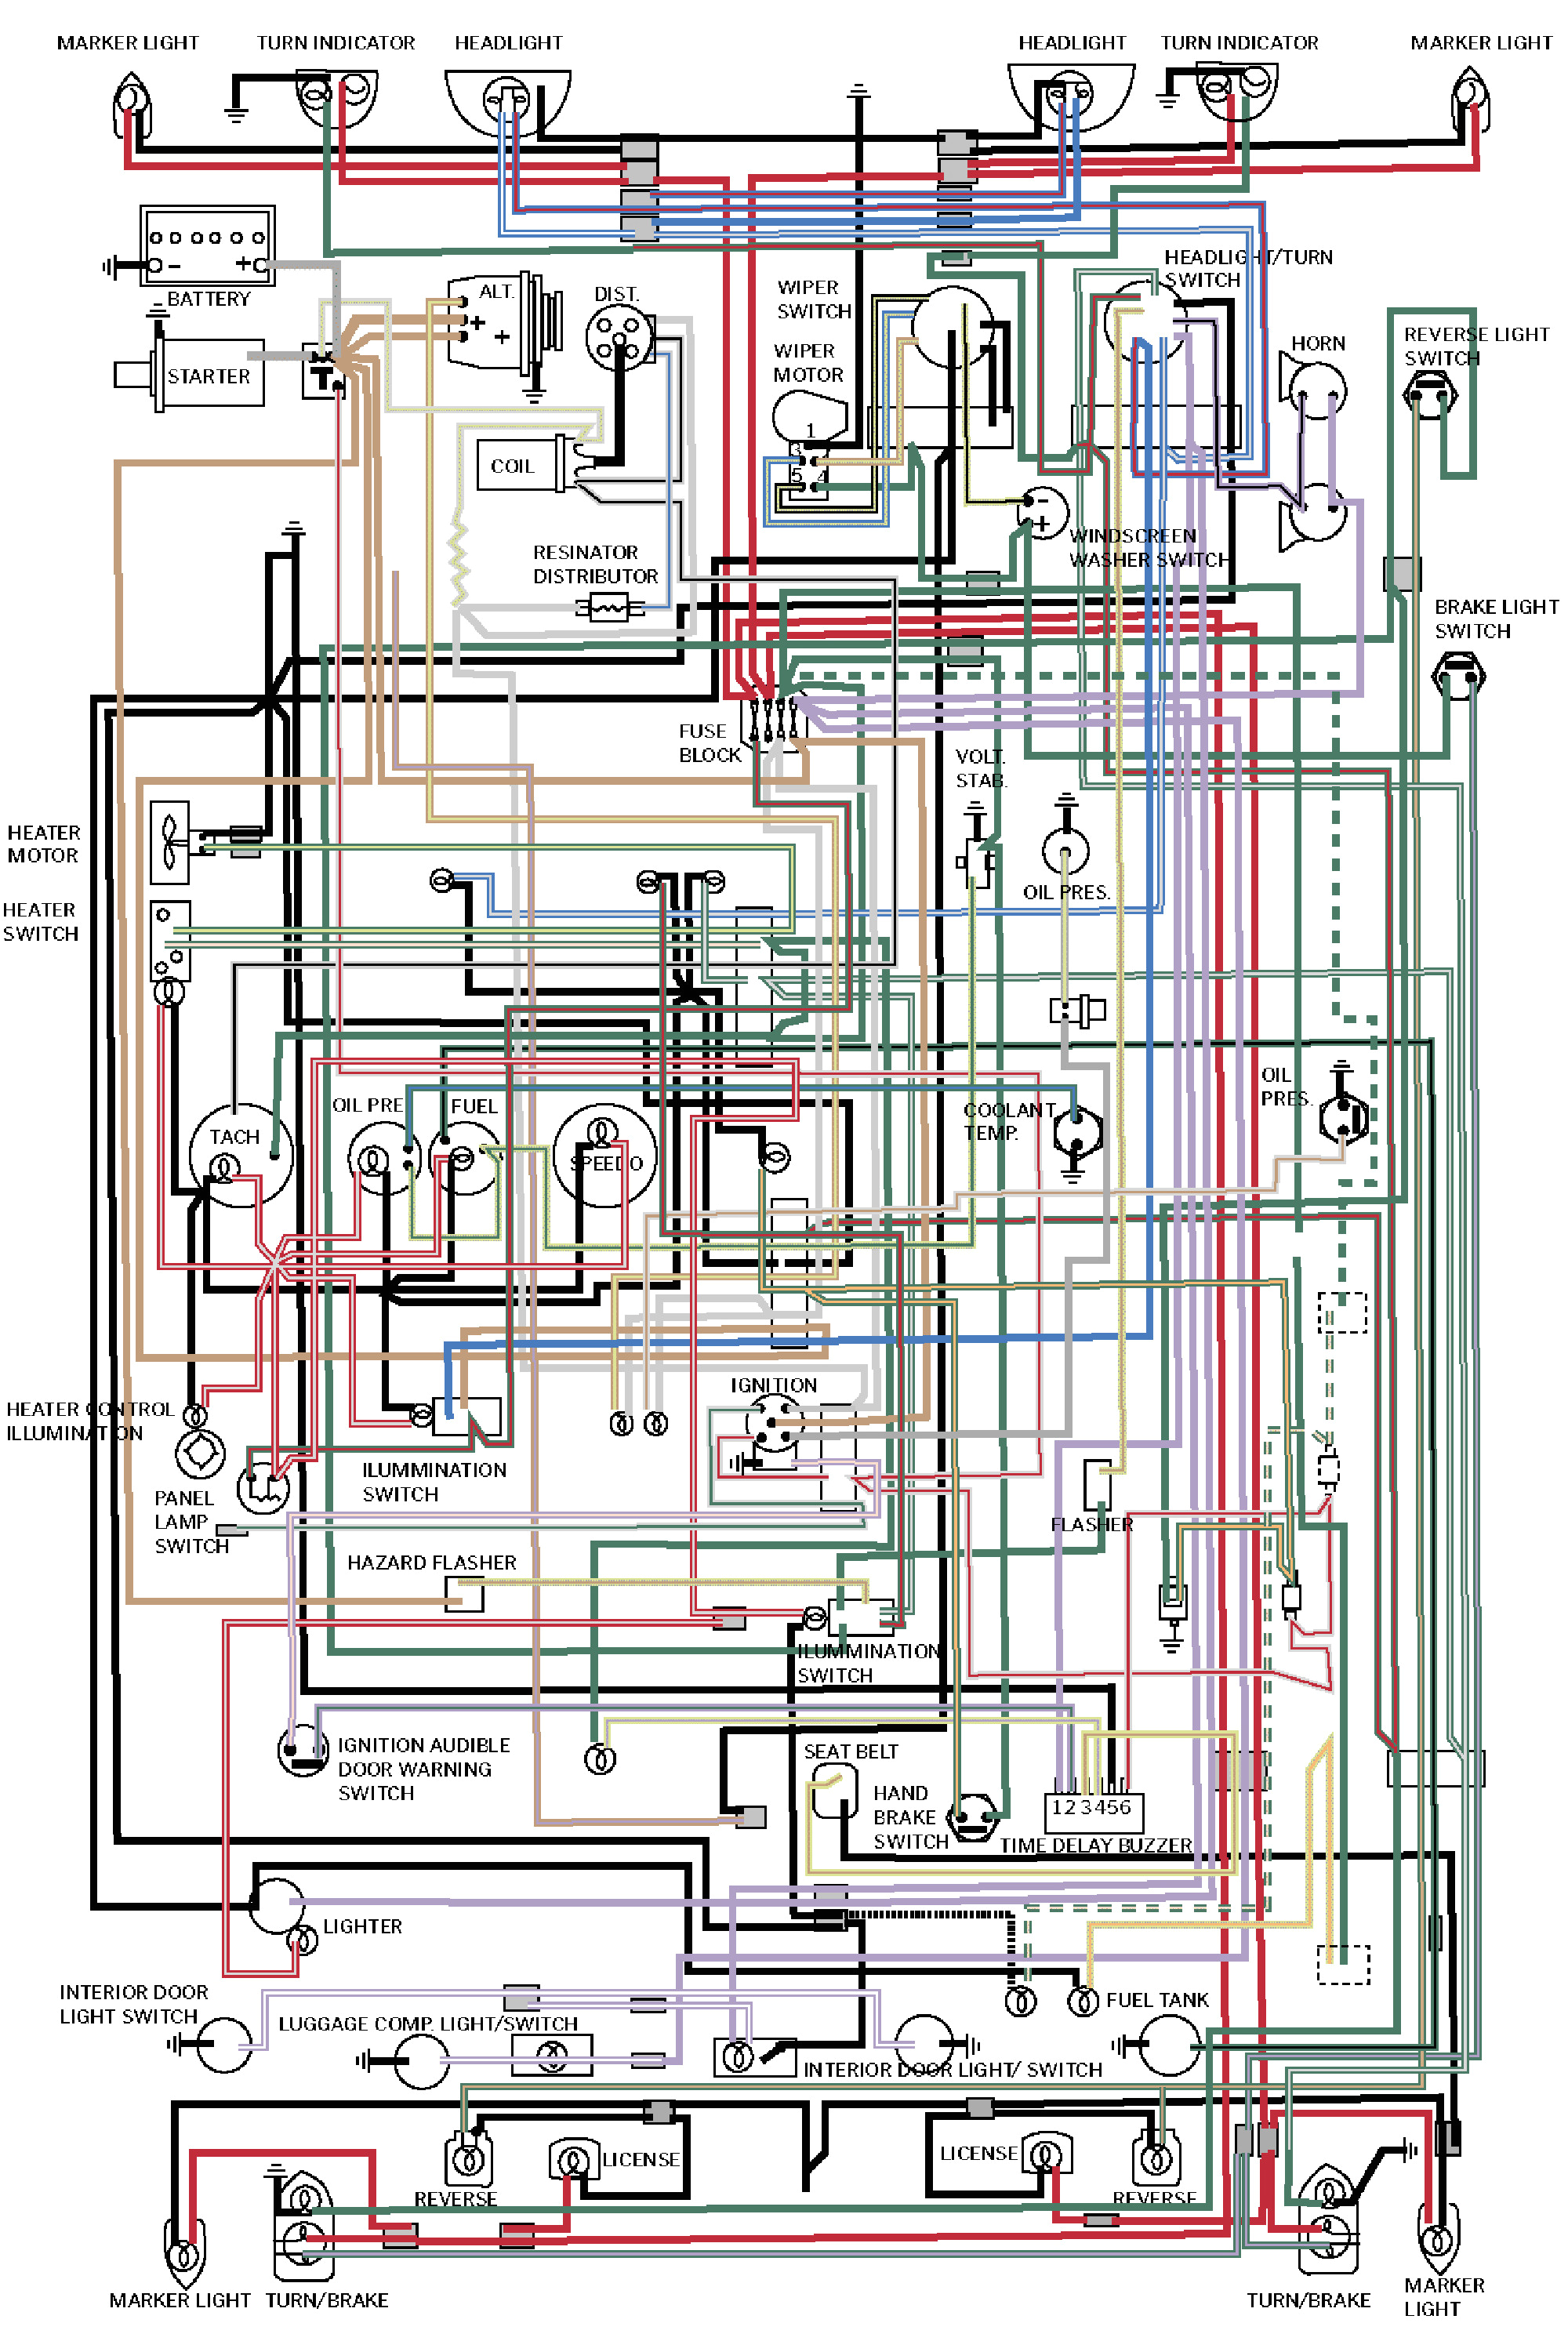 1976 mgb wiring diagram od wiring diagram fascinating 1976 mg wiring diagram